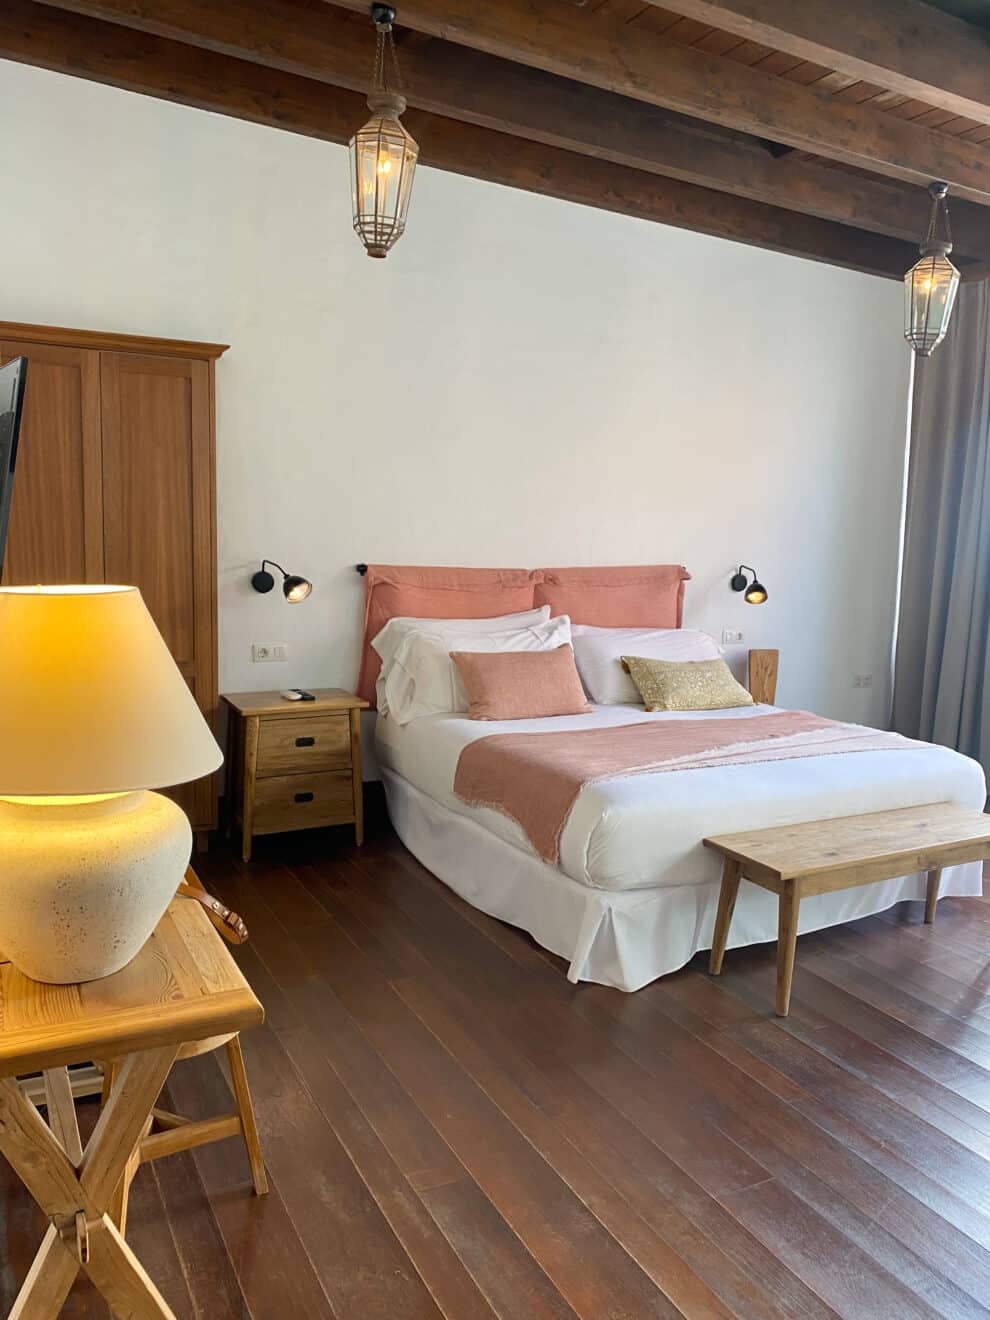 Palacio Ico - beste hotels op Lanzarote 2023, tips, vakantie, Teguise